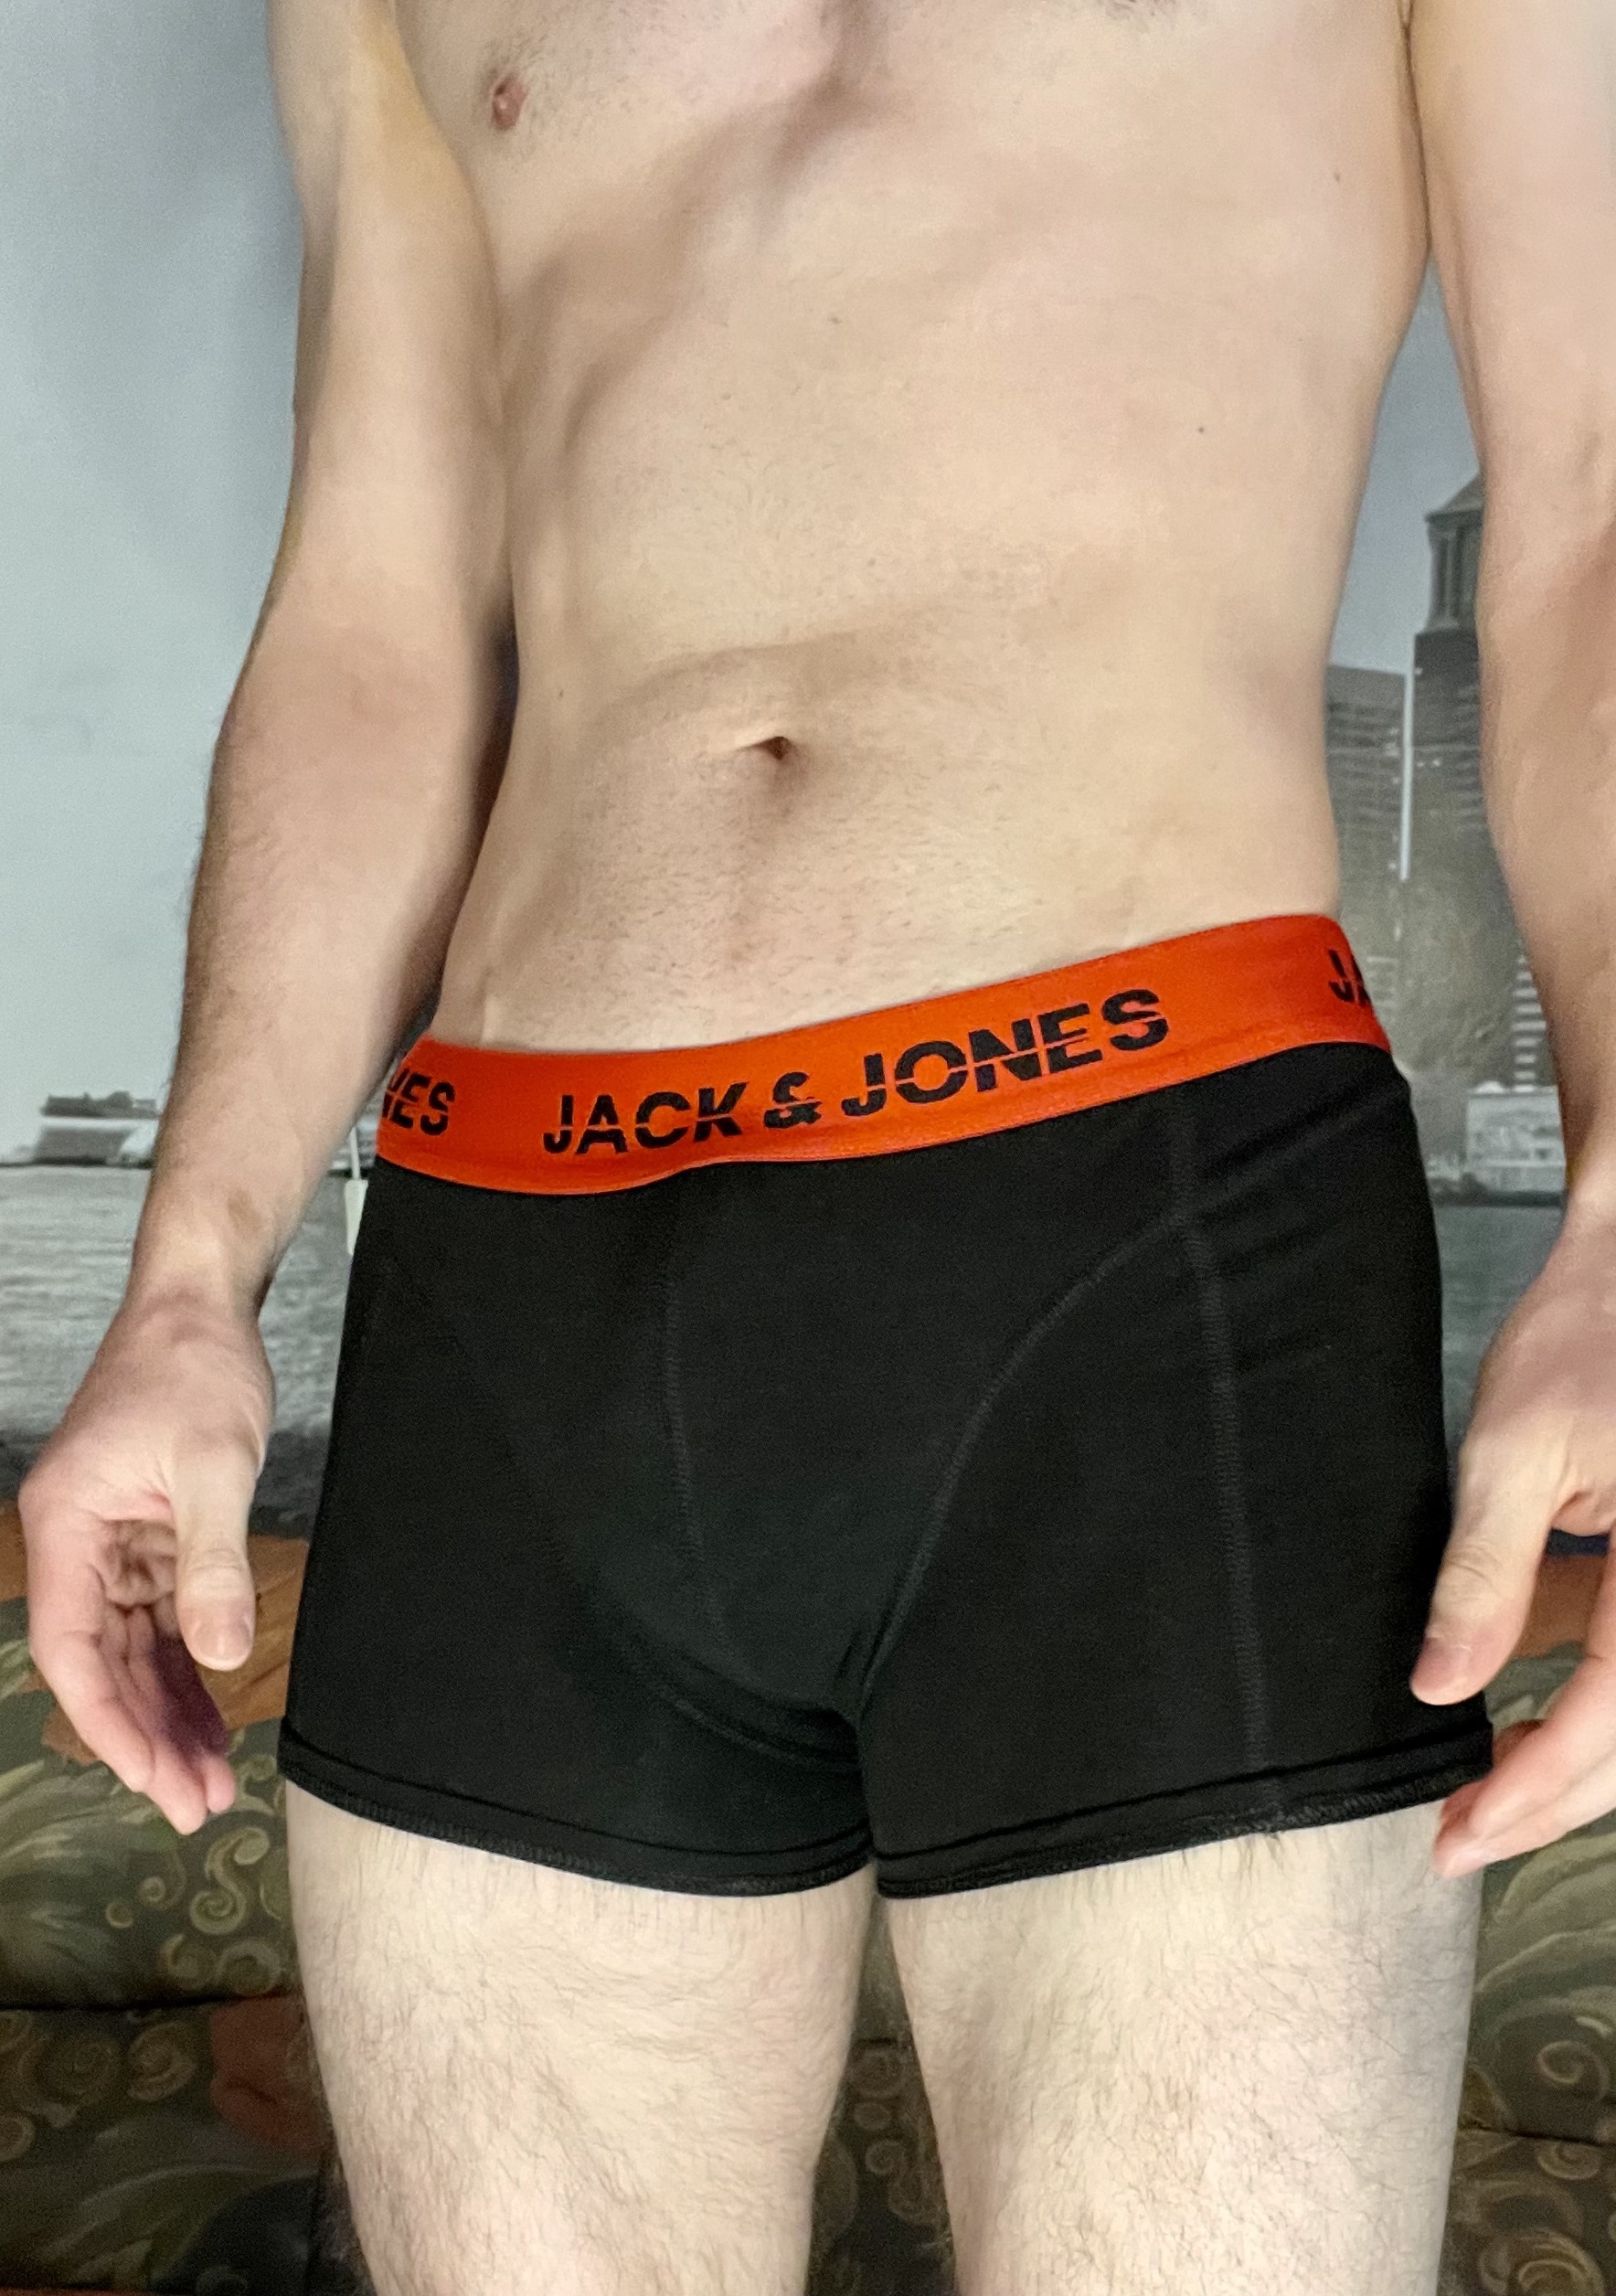 A: Schwarz-organgene JACK & JONES Boxershorts